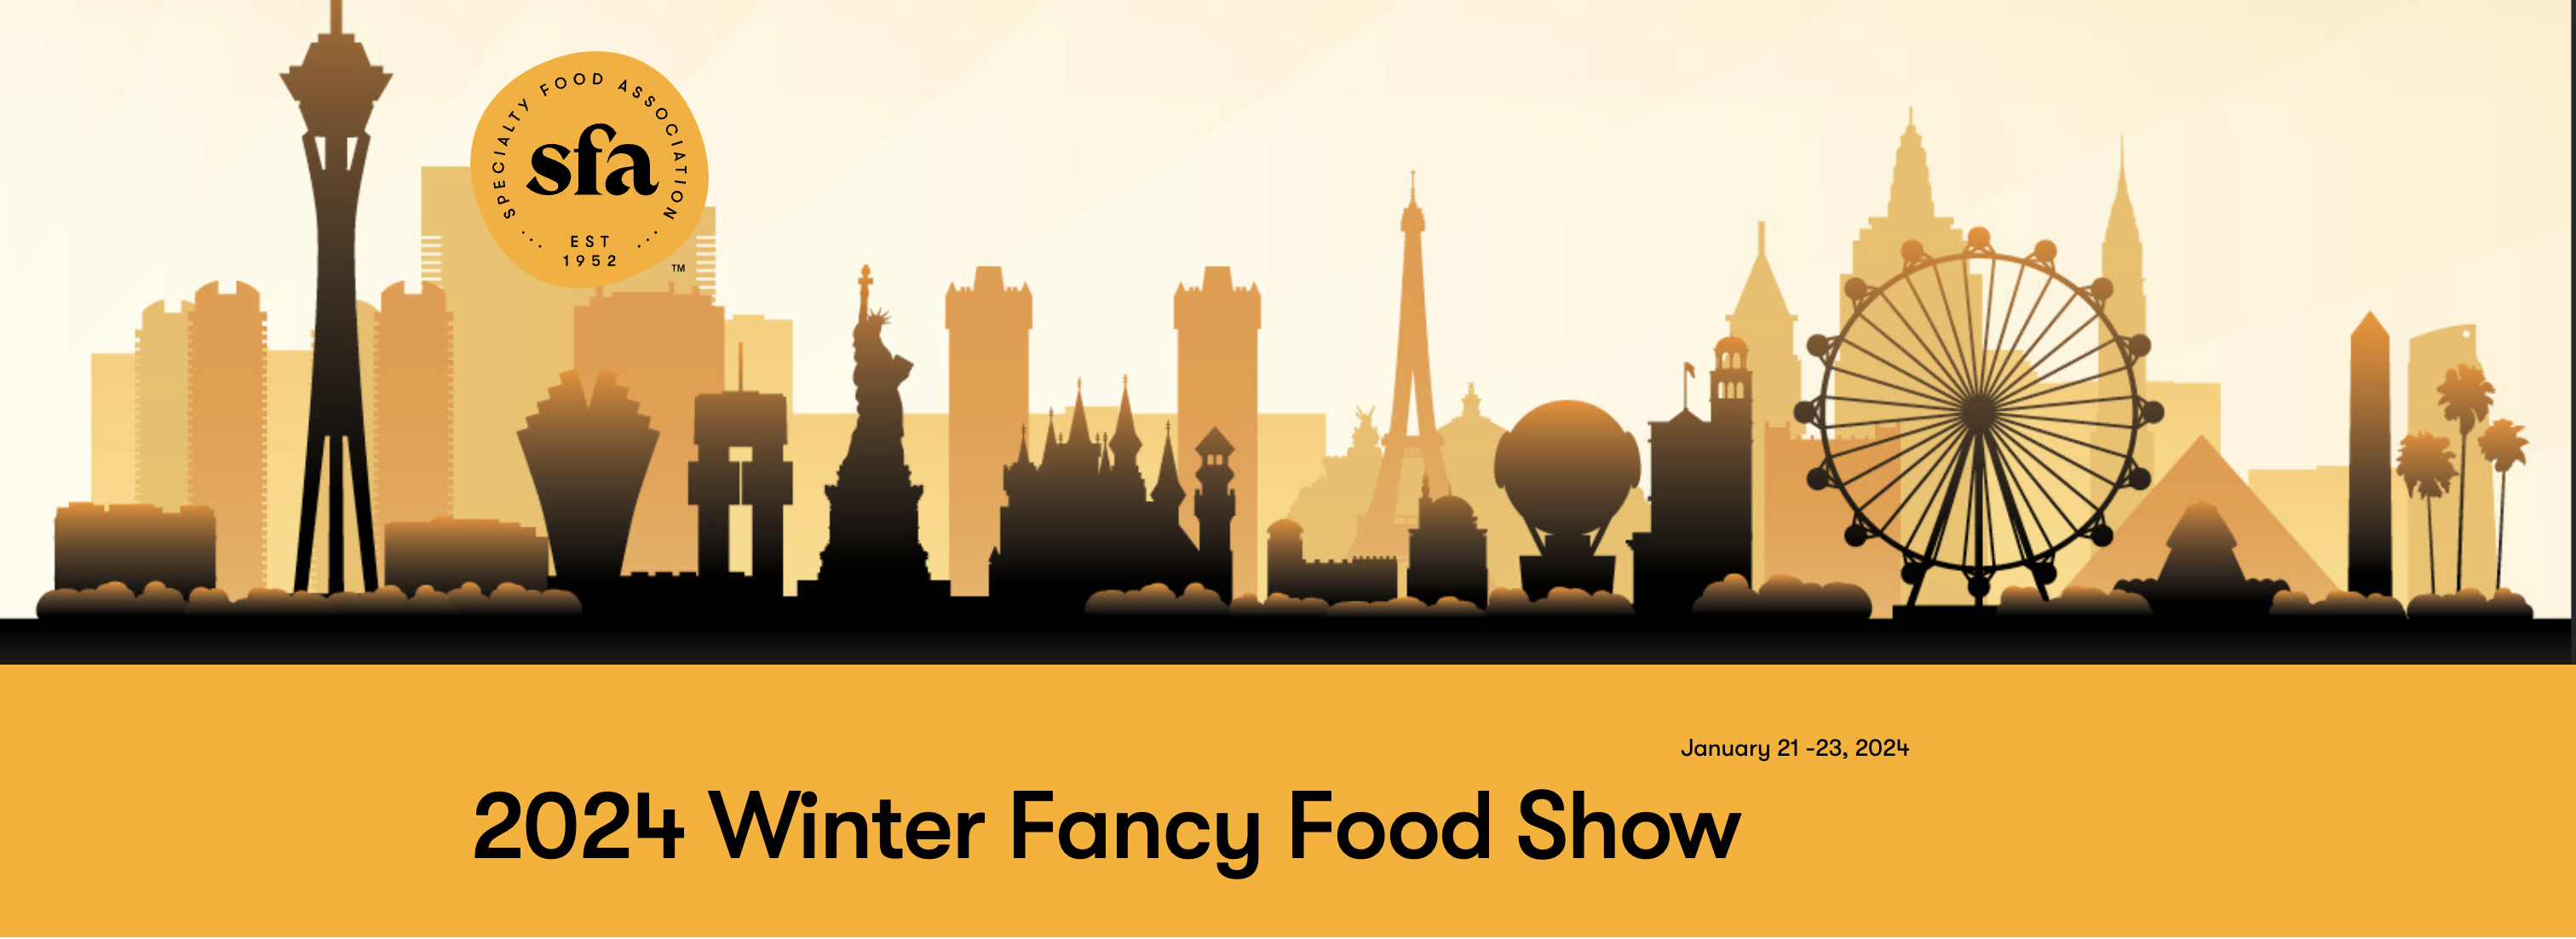 Winter Fancy Food Show 2024 Floor Plan Rowe Wanids